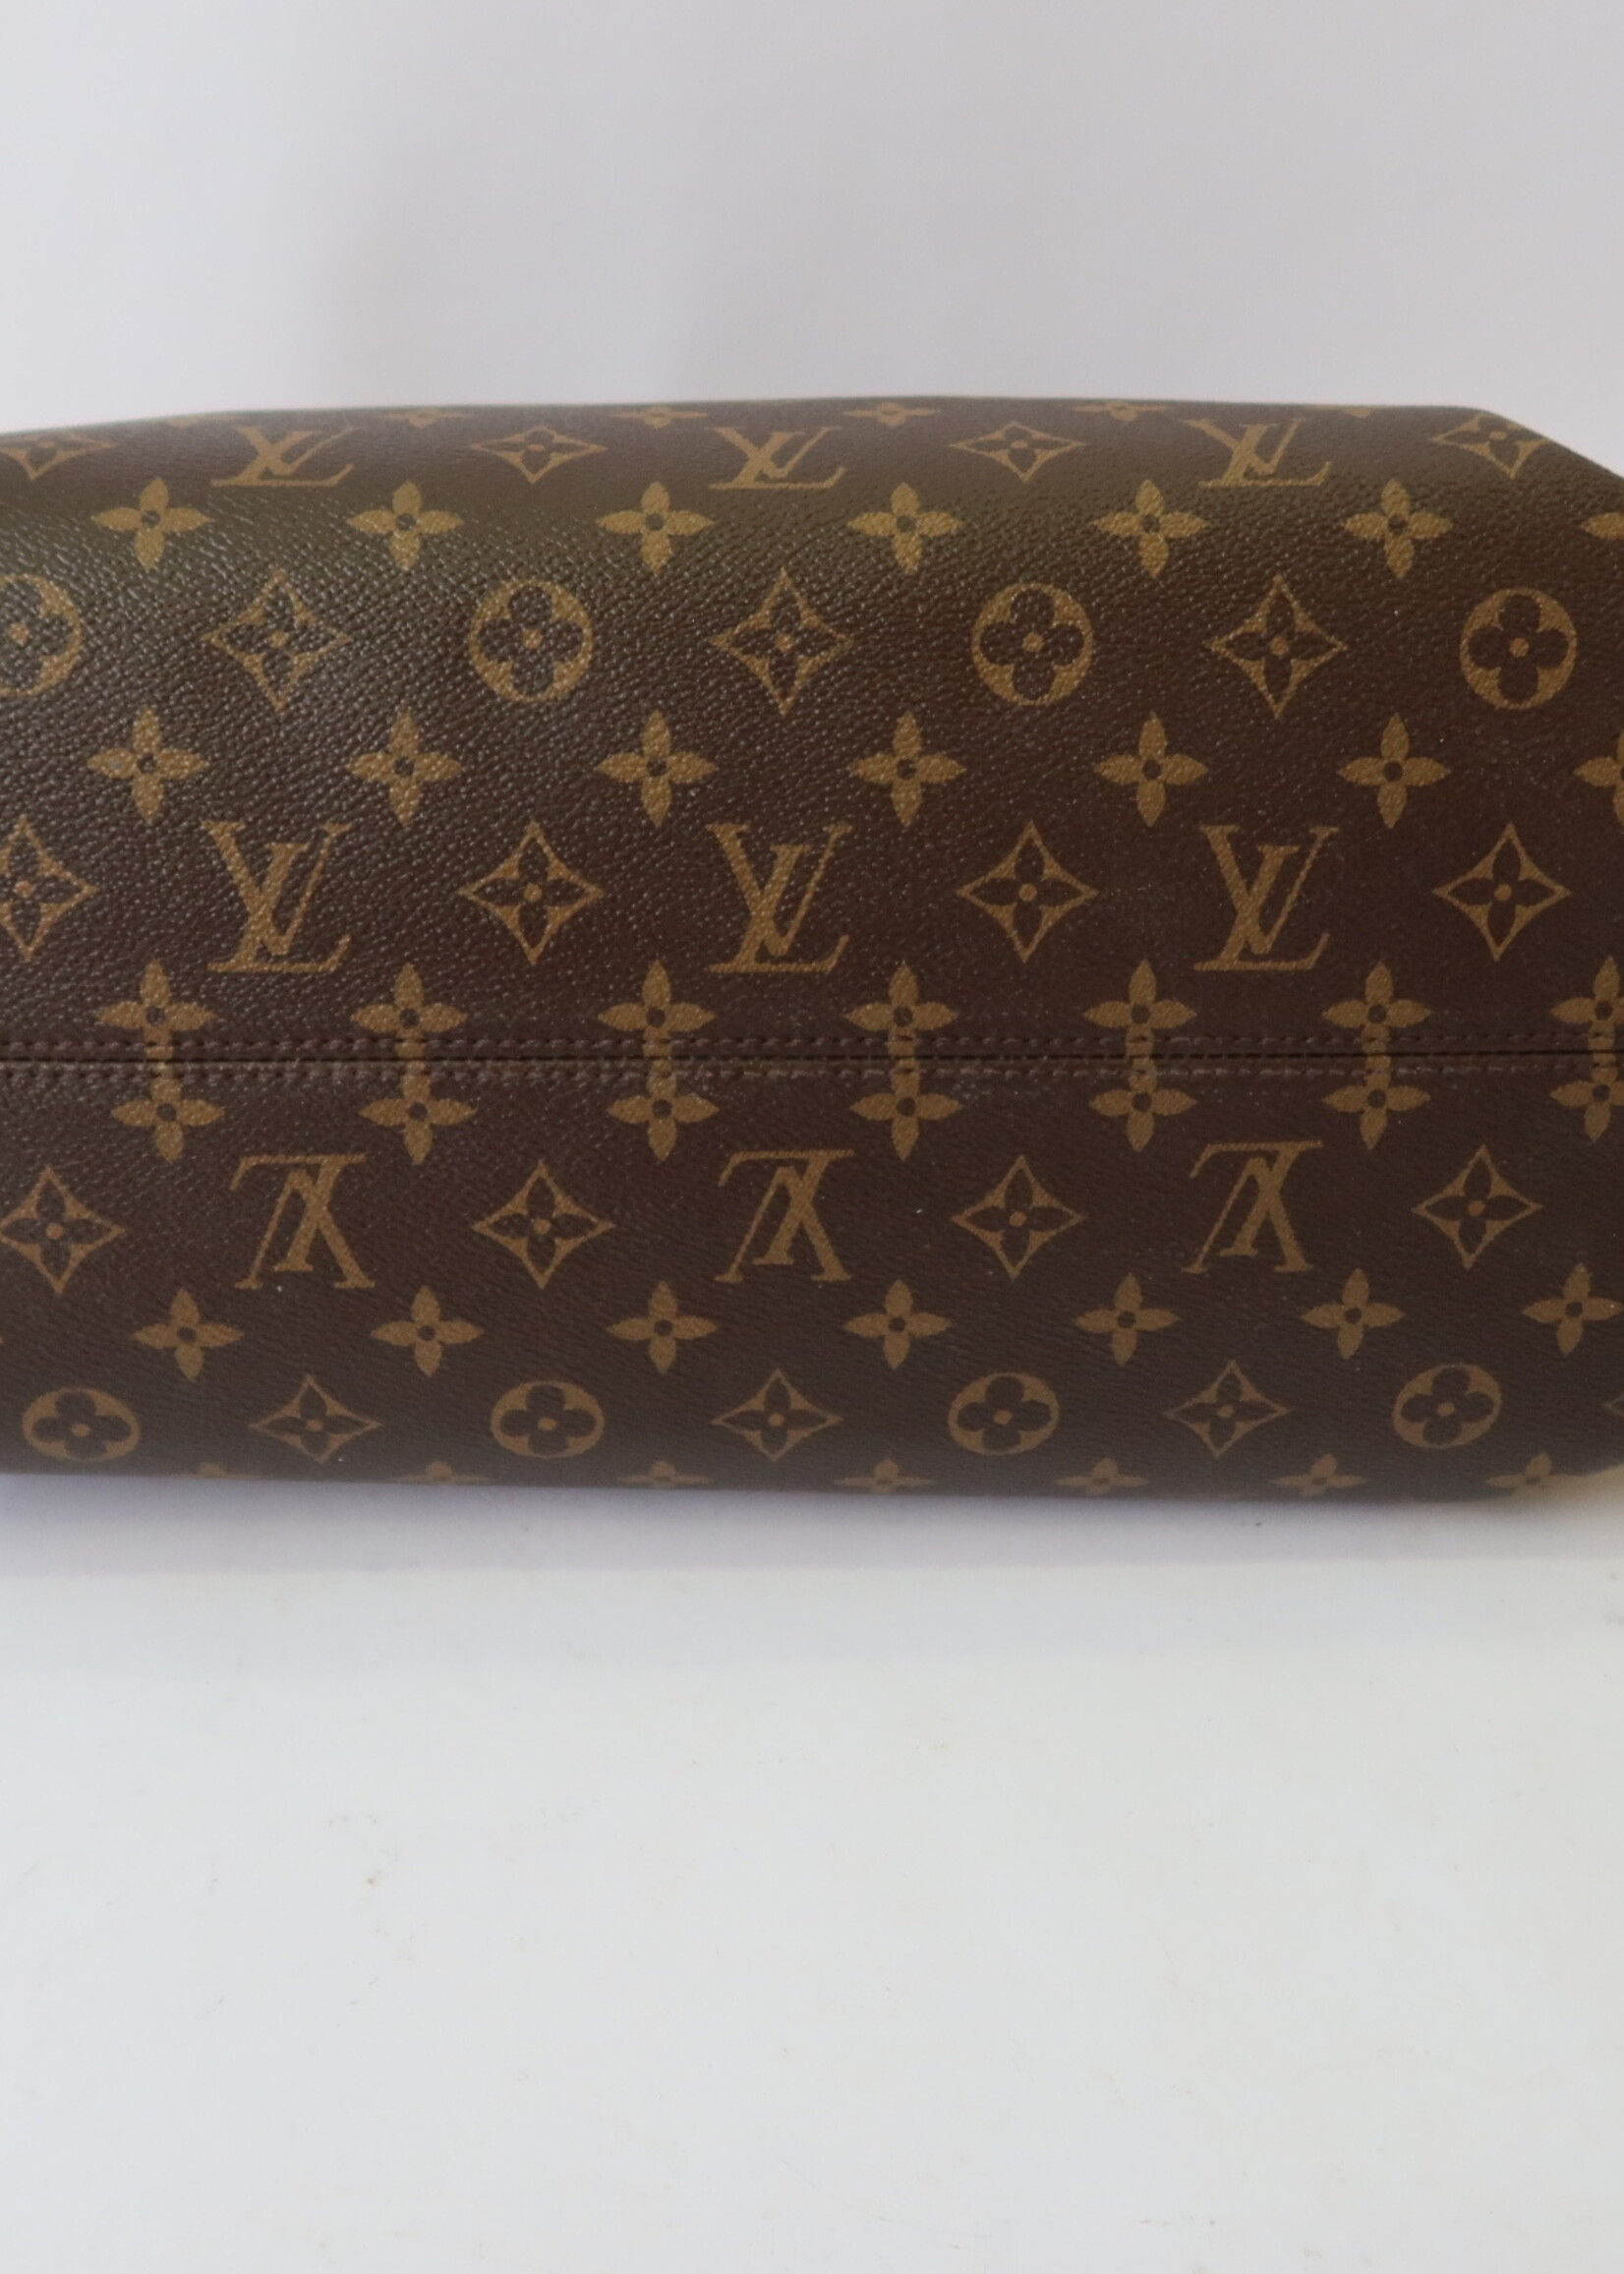 Louis Vuitton Monogram Graceful MM